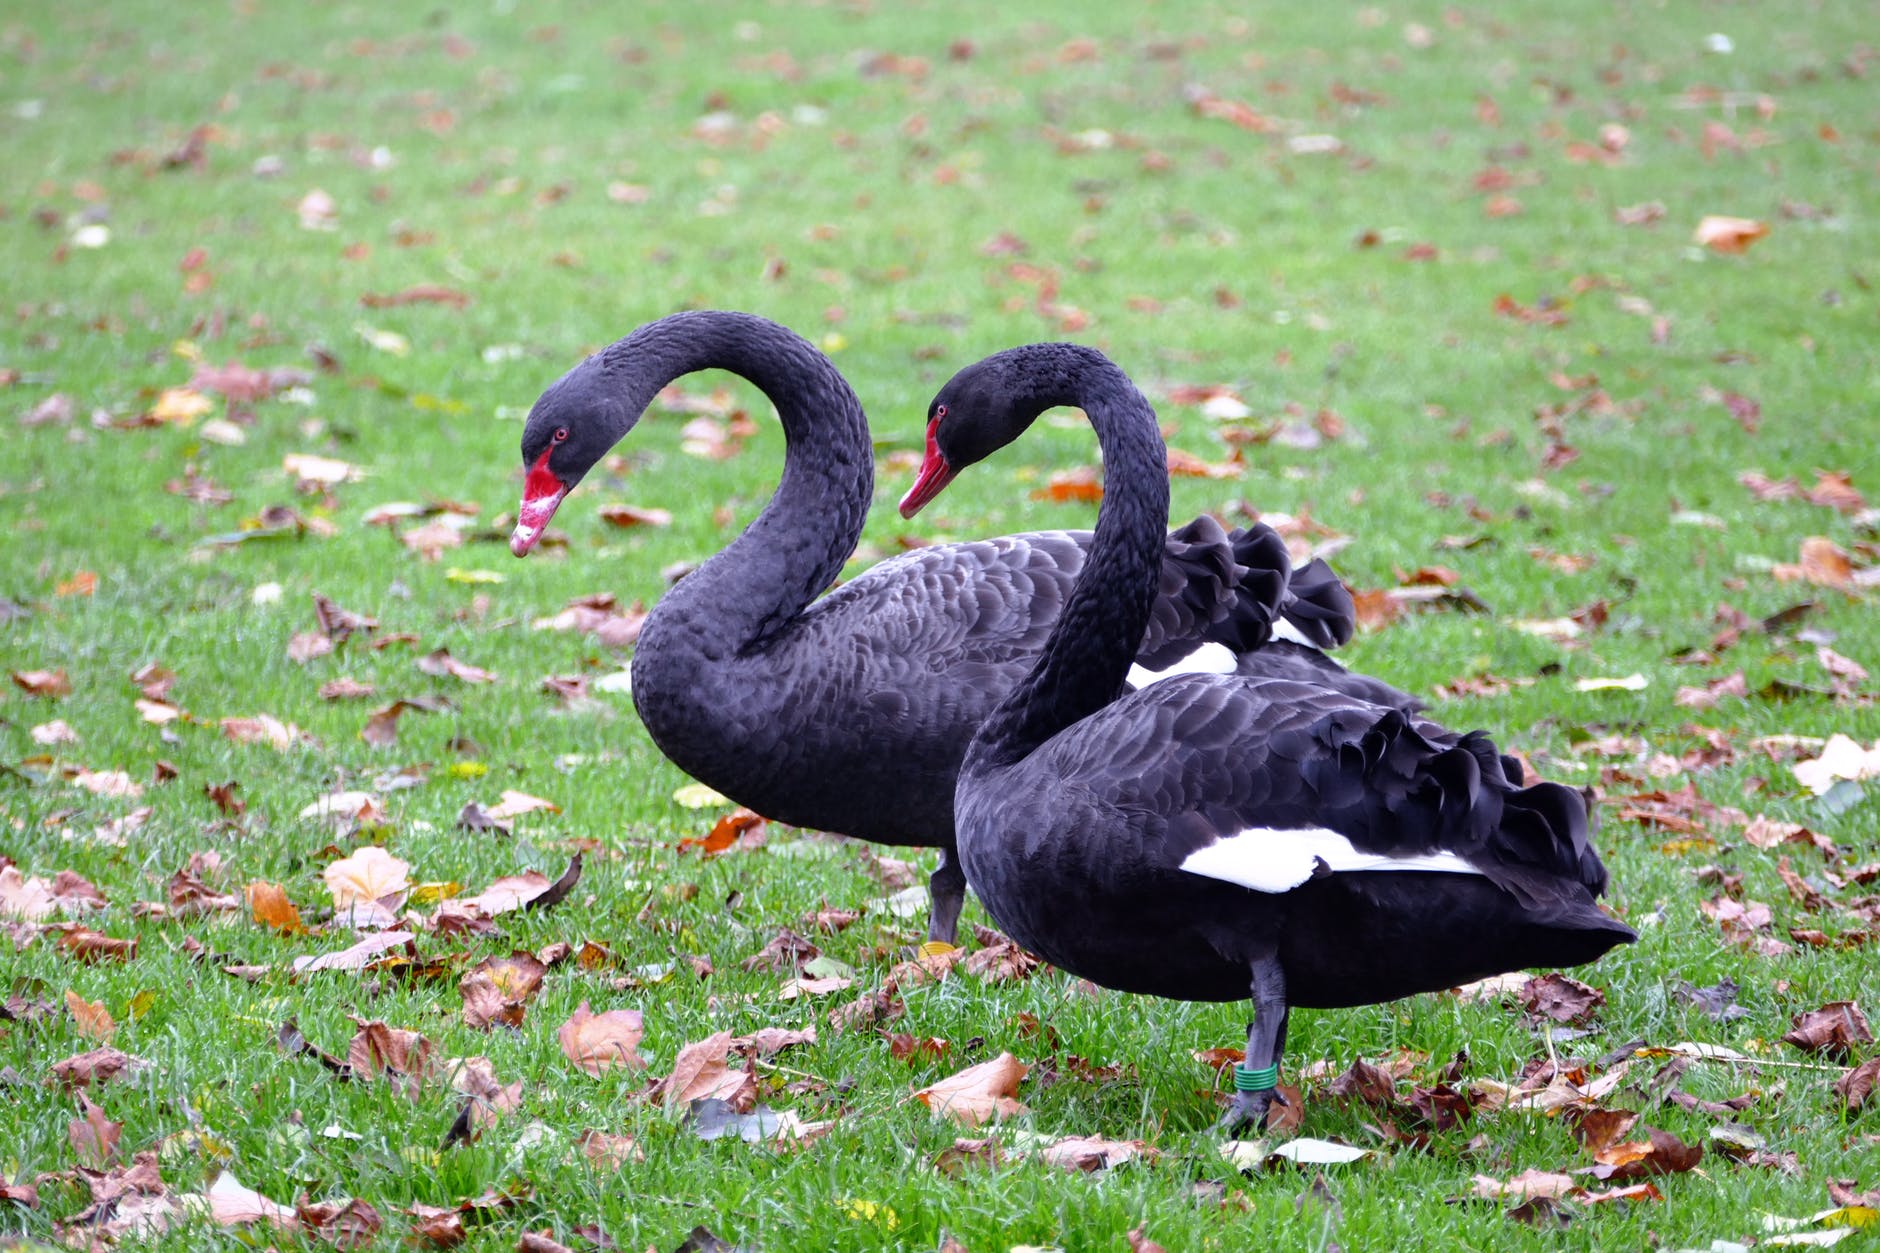 two black ducks on grass lawn